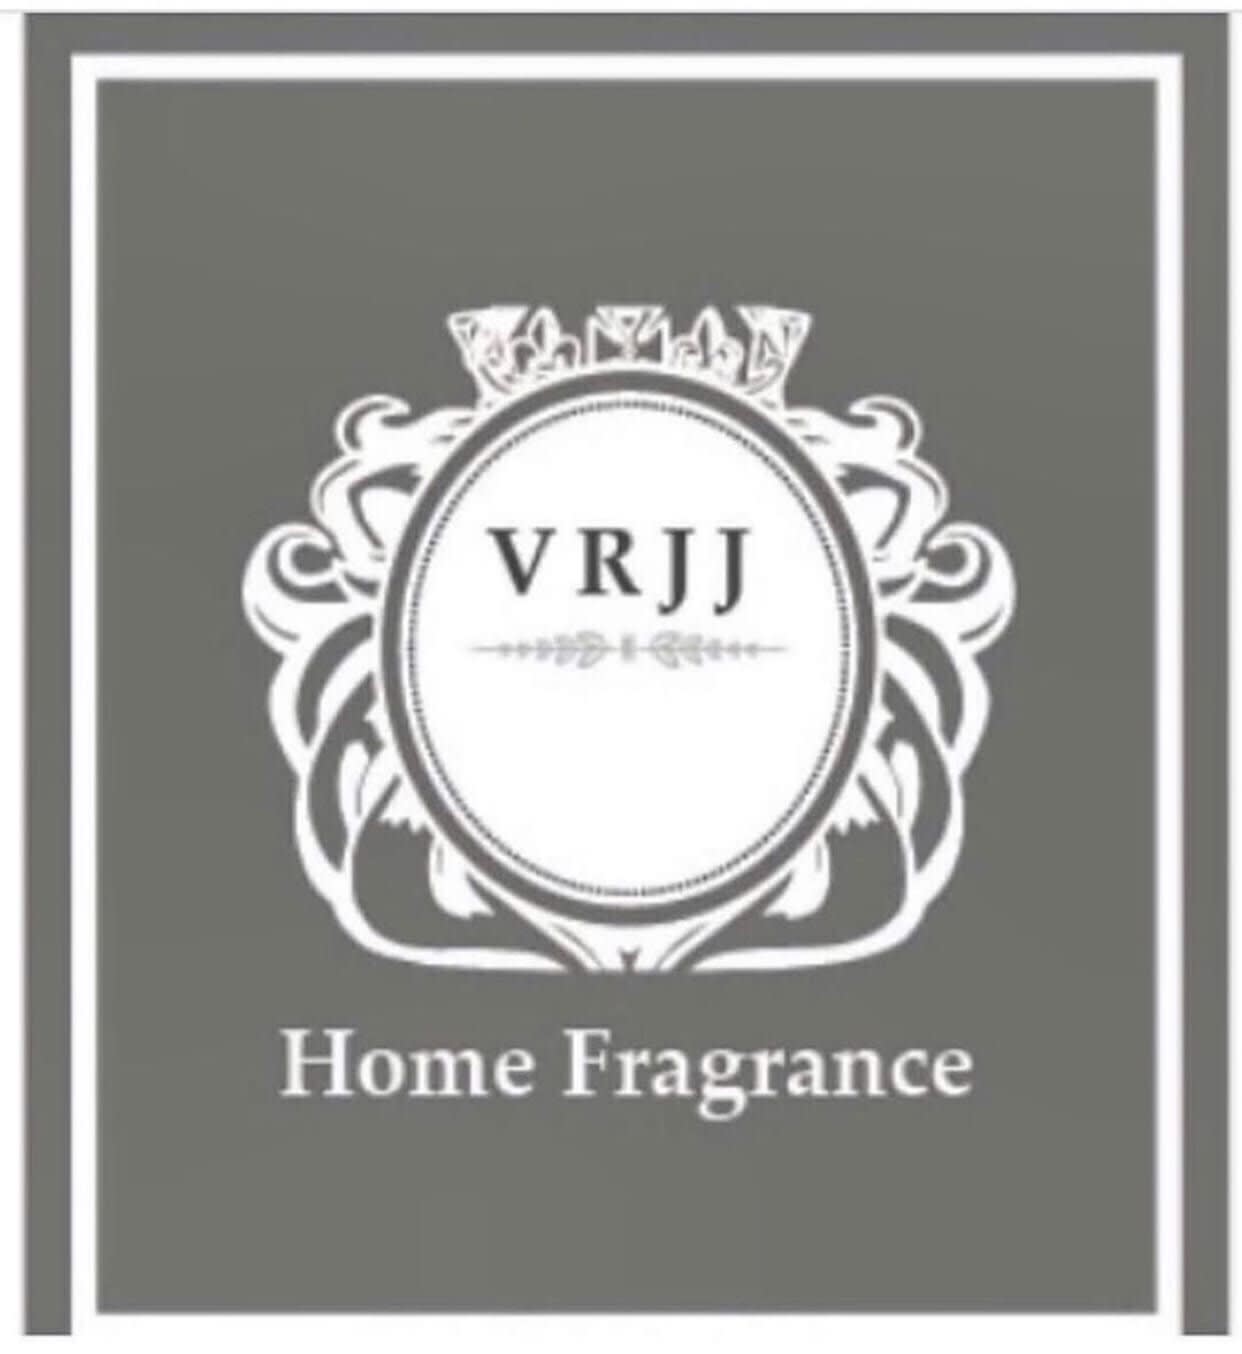 VRJJ Home Fragrance